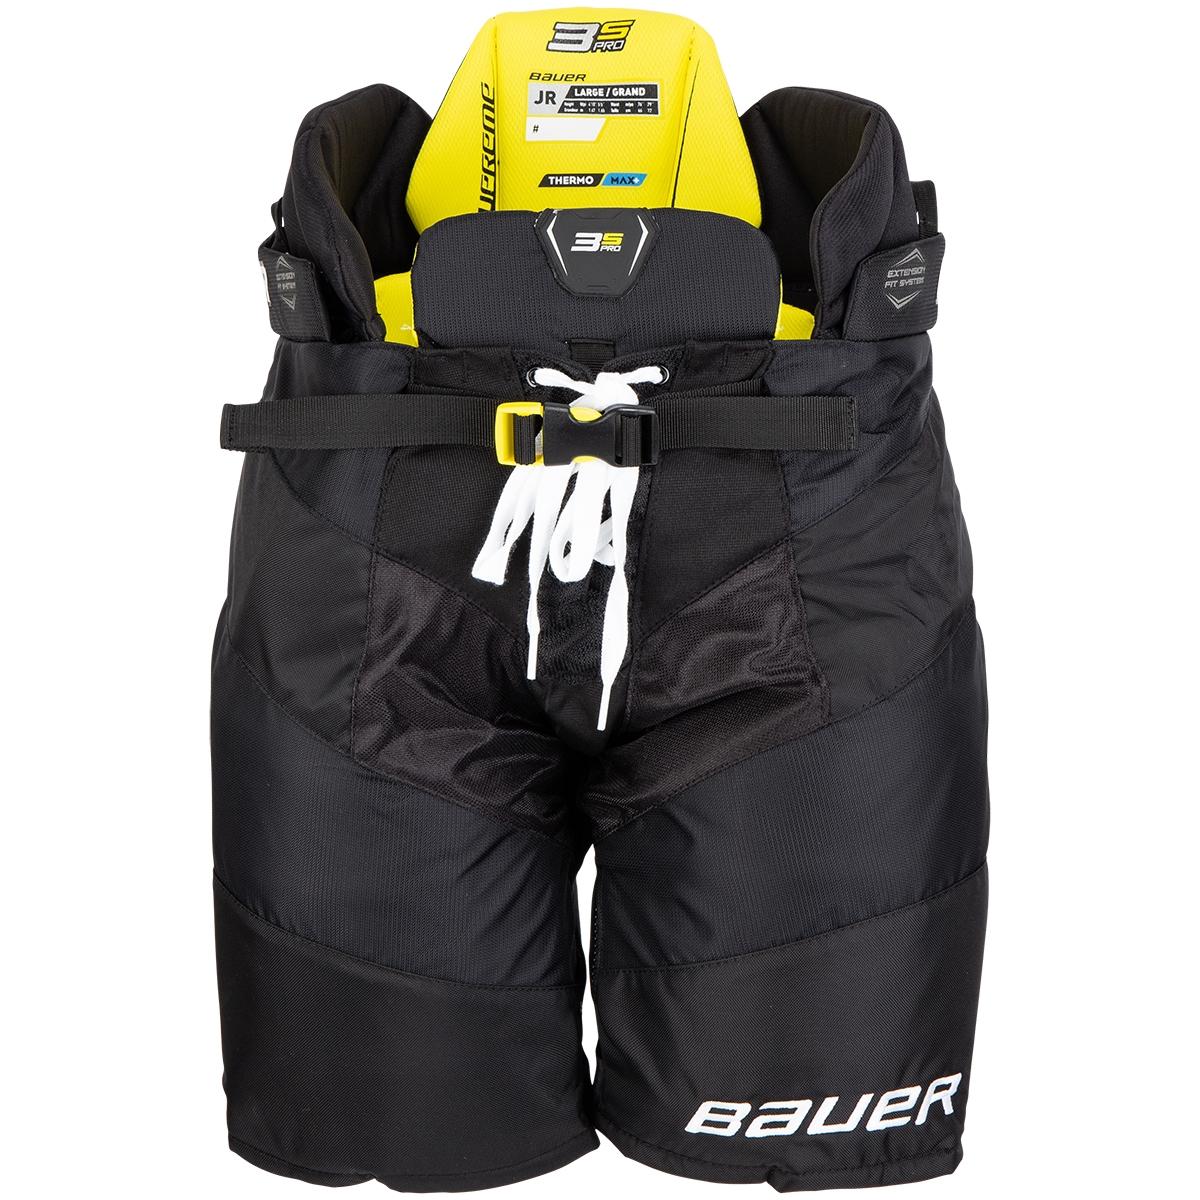 Bauer Supreme 3S Pro Jr. Hockey Pantsproduct zoom image #2